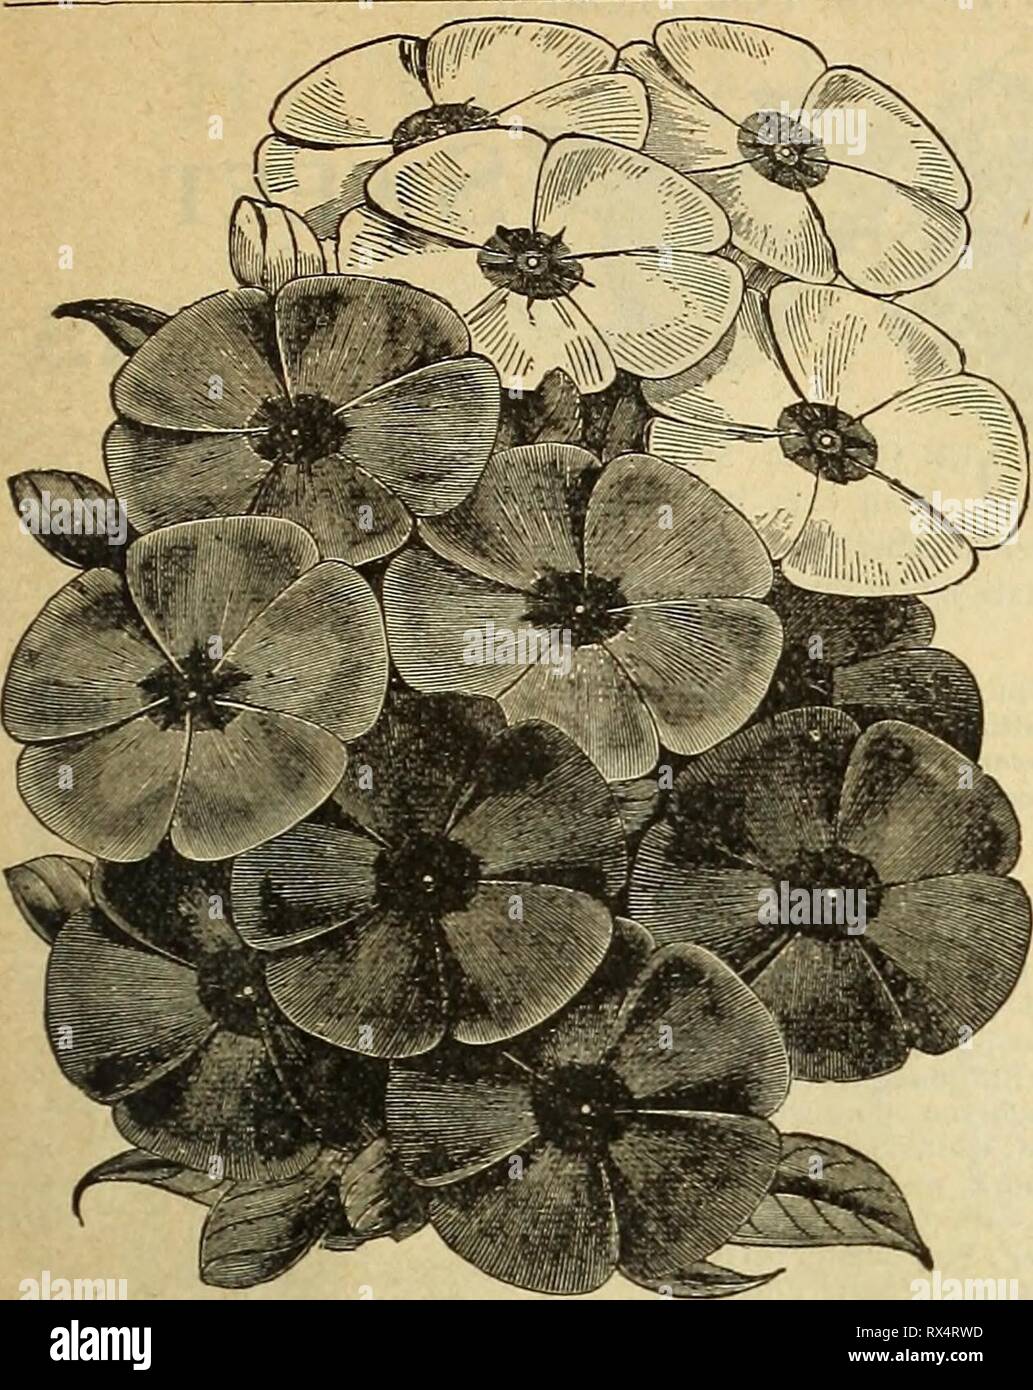 E H Hunt's catalogue (1895) E. H. Hunt's catalogue ehhuntscatalogu1895ehhu 0 Year: 1895  E. H. HUNT, CHICAGO, CATALOGUE FOR FLORISTS.   PHLOX DRUMMONDI. RICINUS (CASTOR OIL PLANT.) Per oz. Borboniensis 15 Gibsoni.. IS Per oz. Africanus 15 Sanguineus 10 Cambodgensis. (,U, Mixed lb., 75c. 10 PHLOX DRUMMONDI. Trade Pkt. Oz. White, Scarlet, Pink, each 10 60 Mixed.. : 10 40 Atropurpurea, blood red  10 GO Star of Quedlinburg 10 GRANDIFLORA; OR, LARGE-FL. VARIETIES. Alba, white; Coccinea, scarlet; Rosea, pink, each 10 1.00 Splendens, crimson, white eye 10 1.00 Isabellina, yellow 15 1.50 Grandiflora M Stock Photo